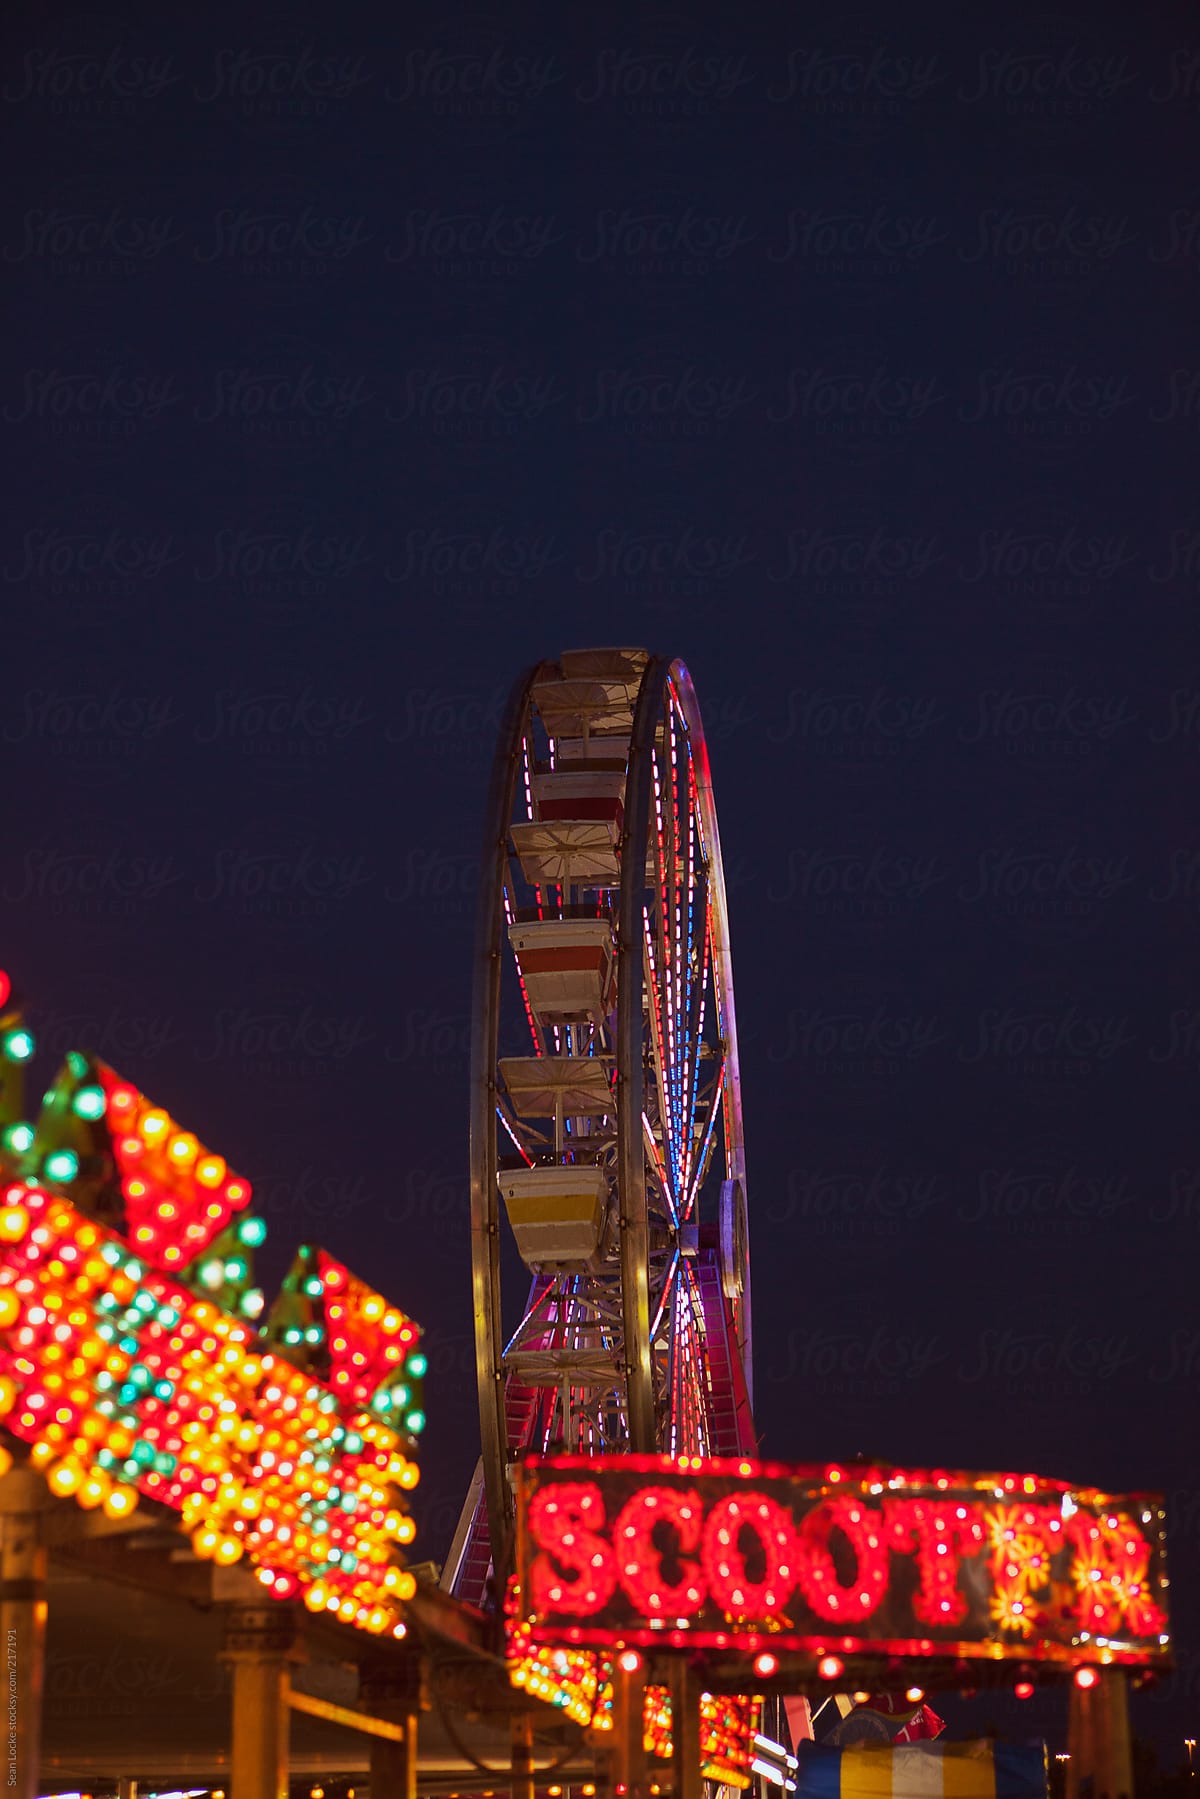 Midway: Ferris Wheel Against Darkened Sky